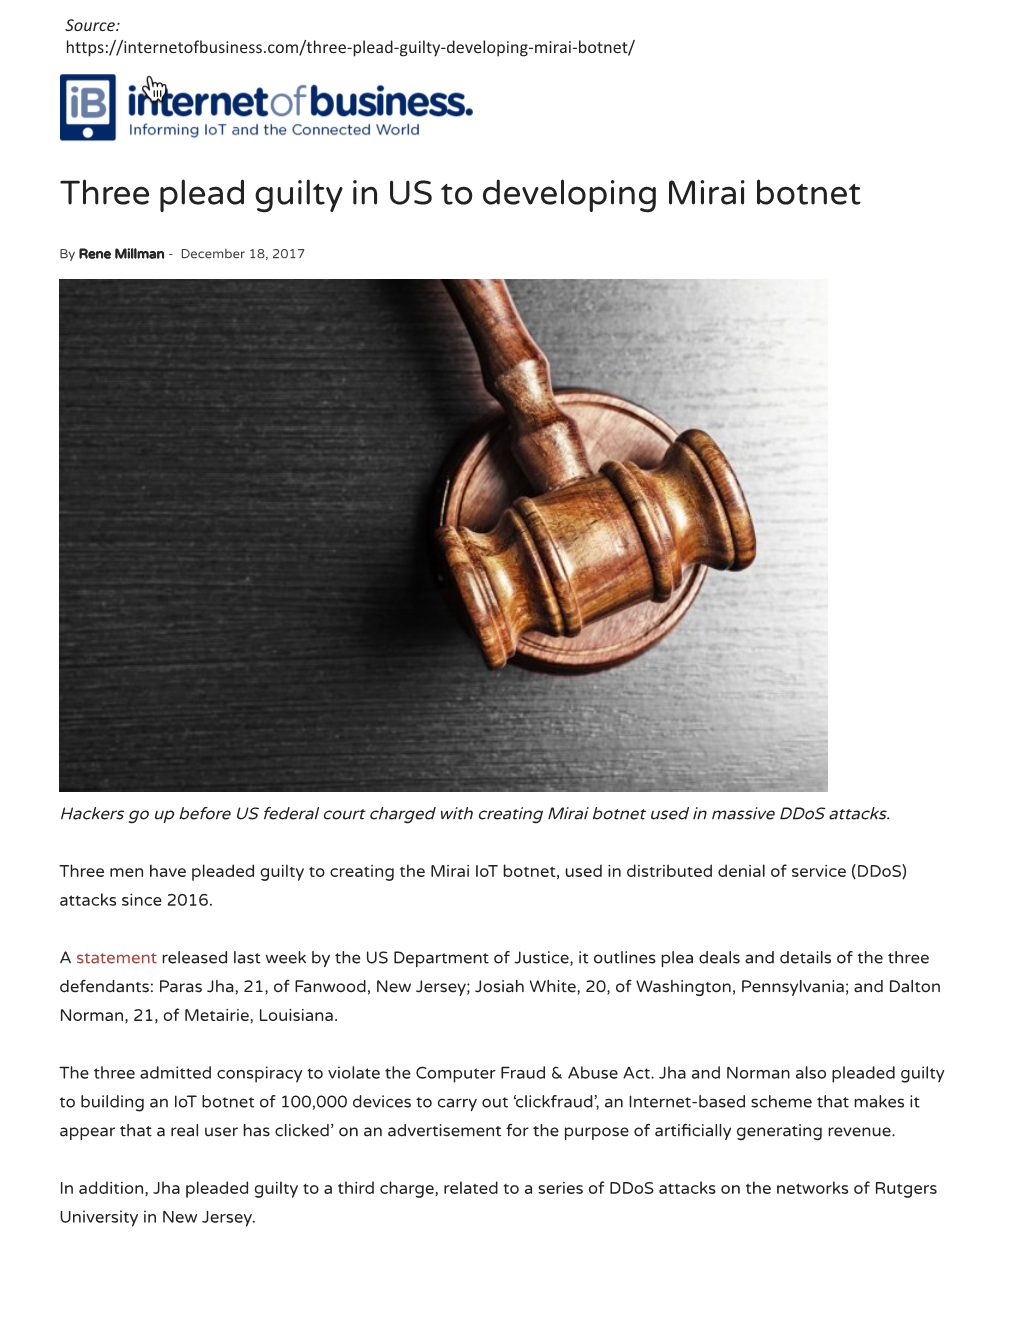 Three Plead Guilty in US to Developing Mirai Botnet